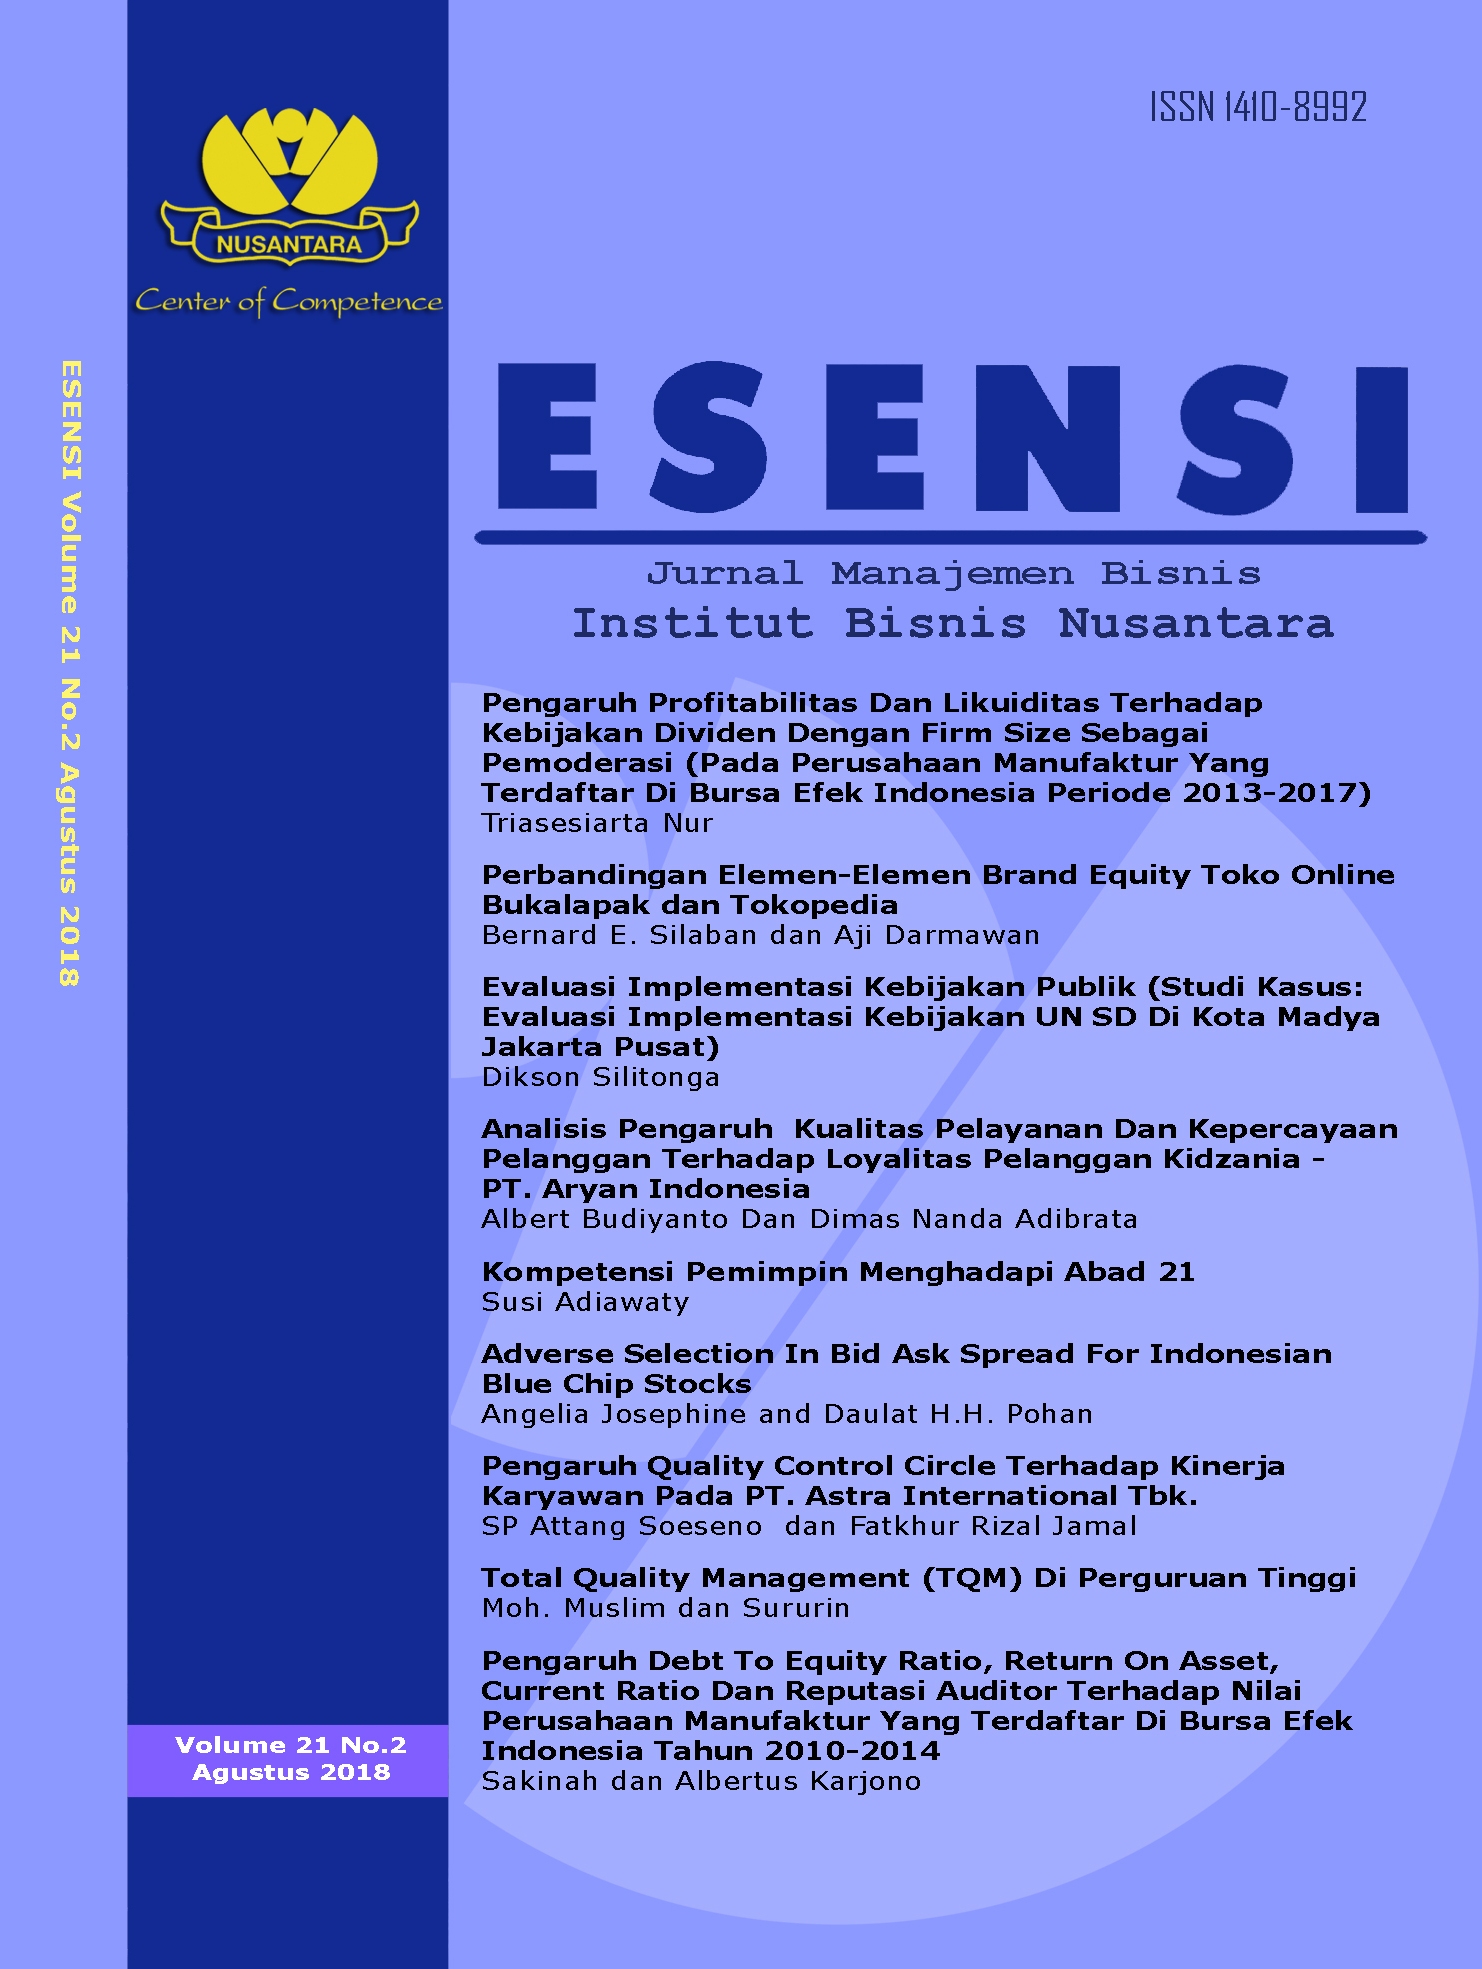 Cover Esensi Vol.21 No.2 Agustus 2018